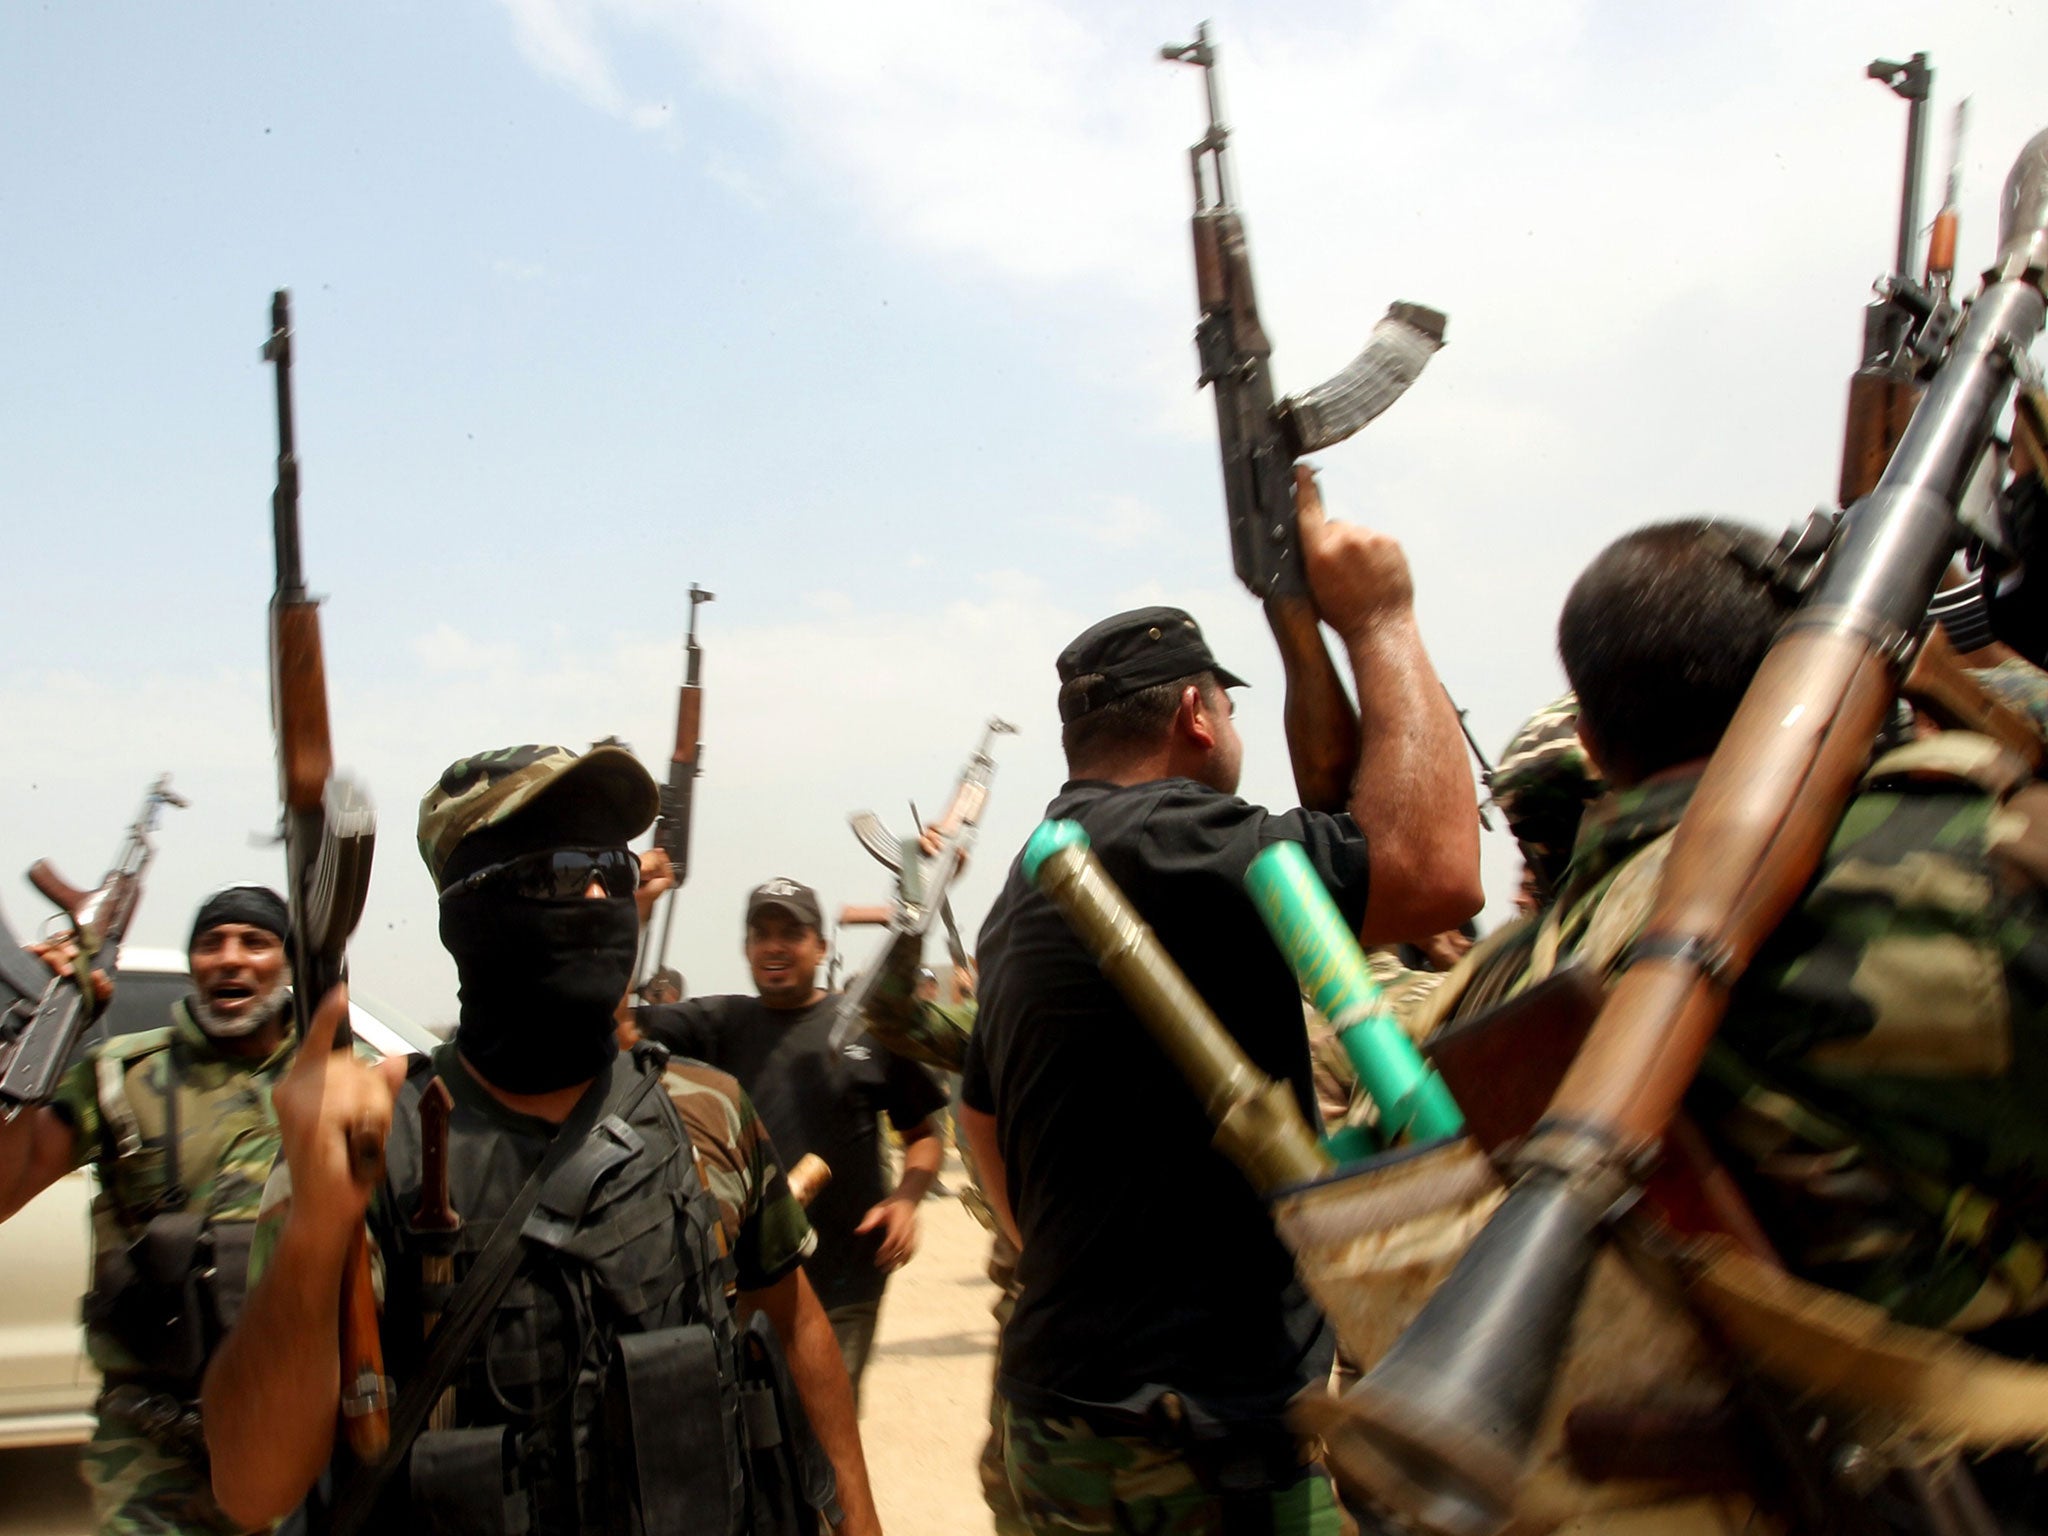 Shia militias in Iraq are allegedly abducting and executing Sunni civilians in apparent revenge for Isis attacks